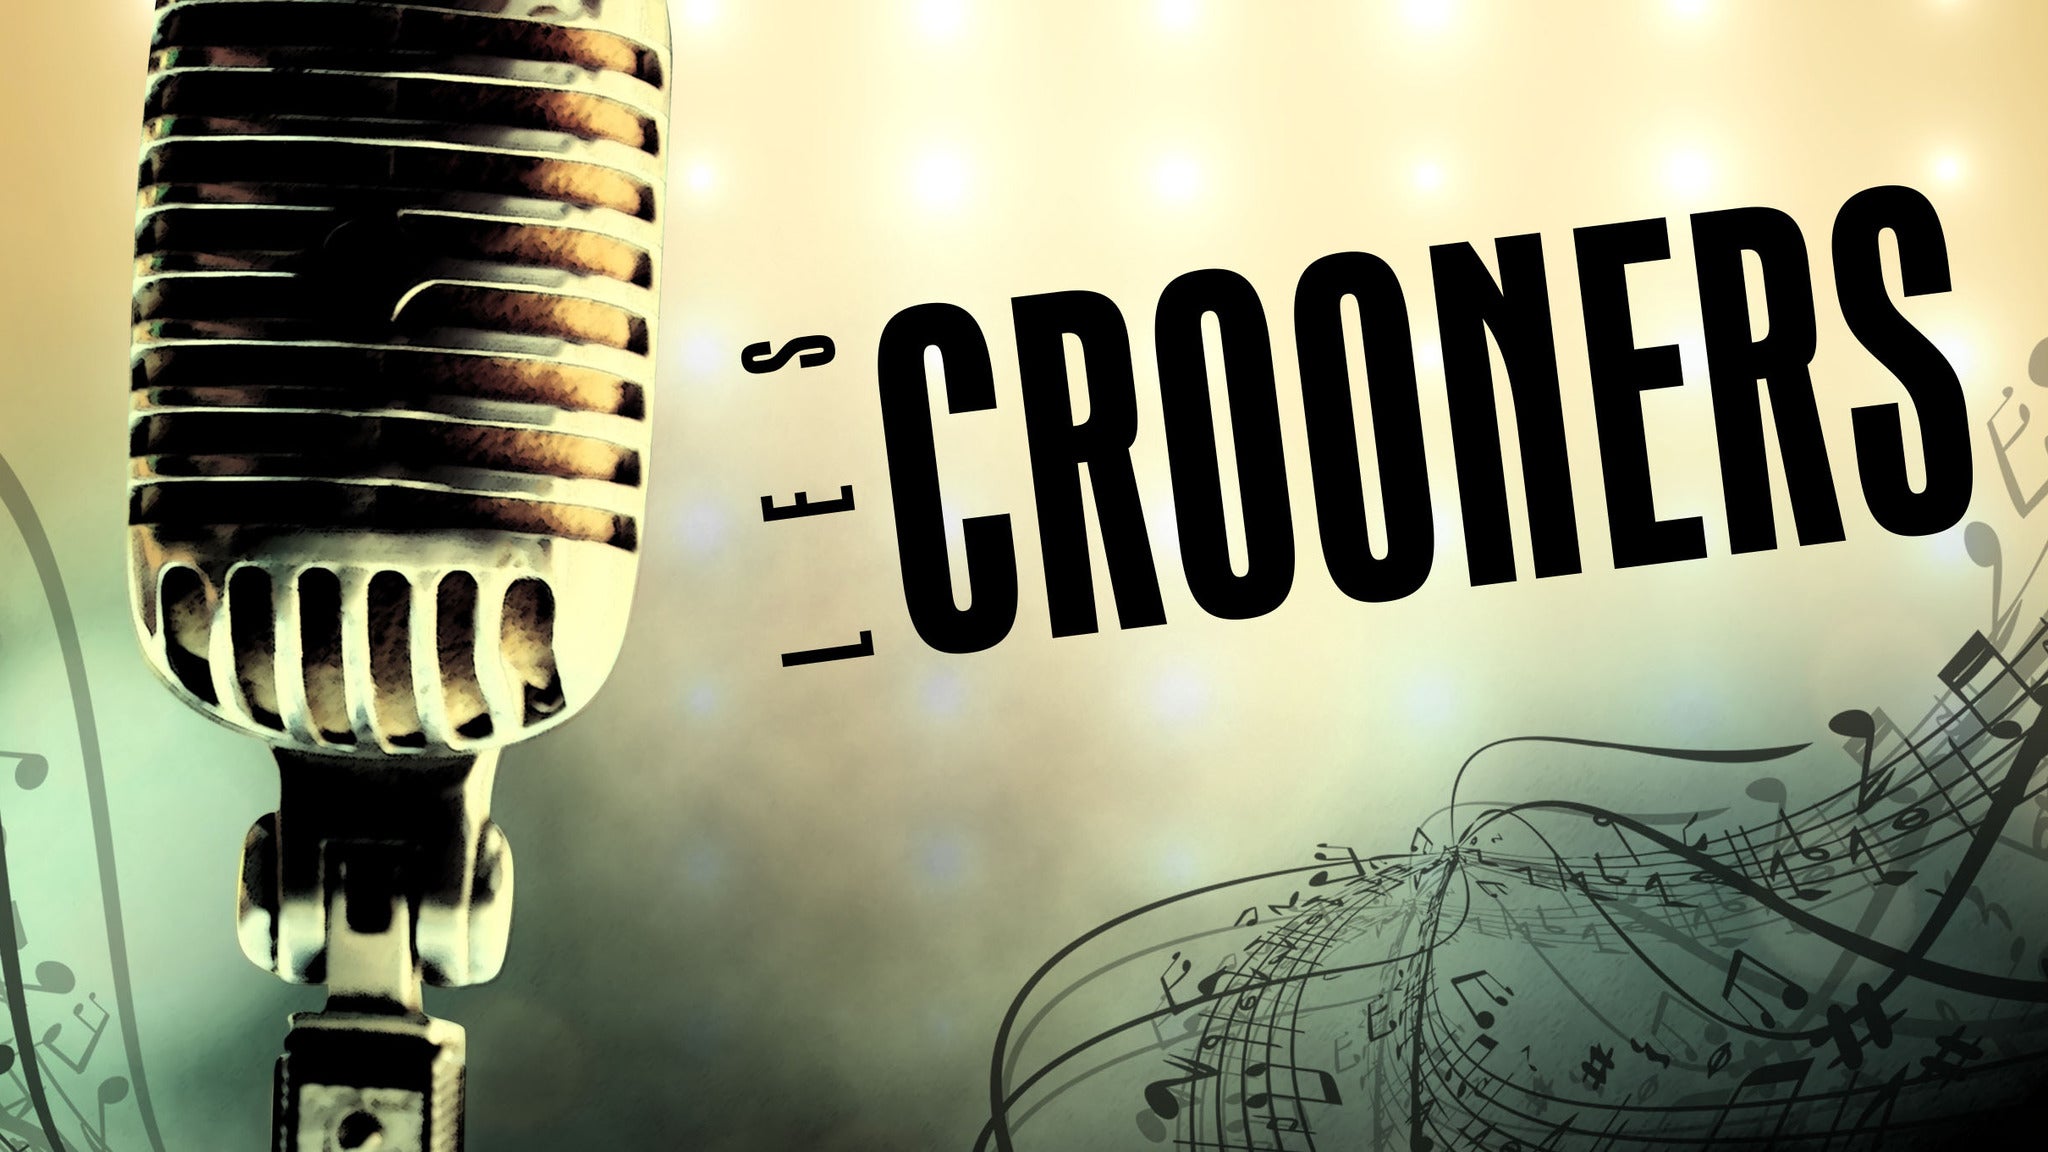 Les Crooners presale information on freepresalepasswords.com